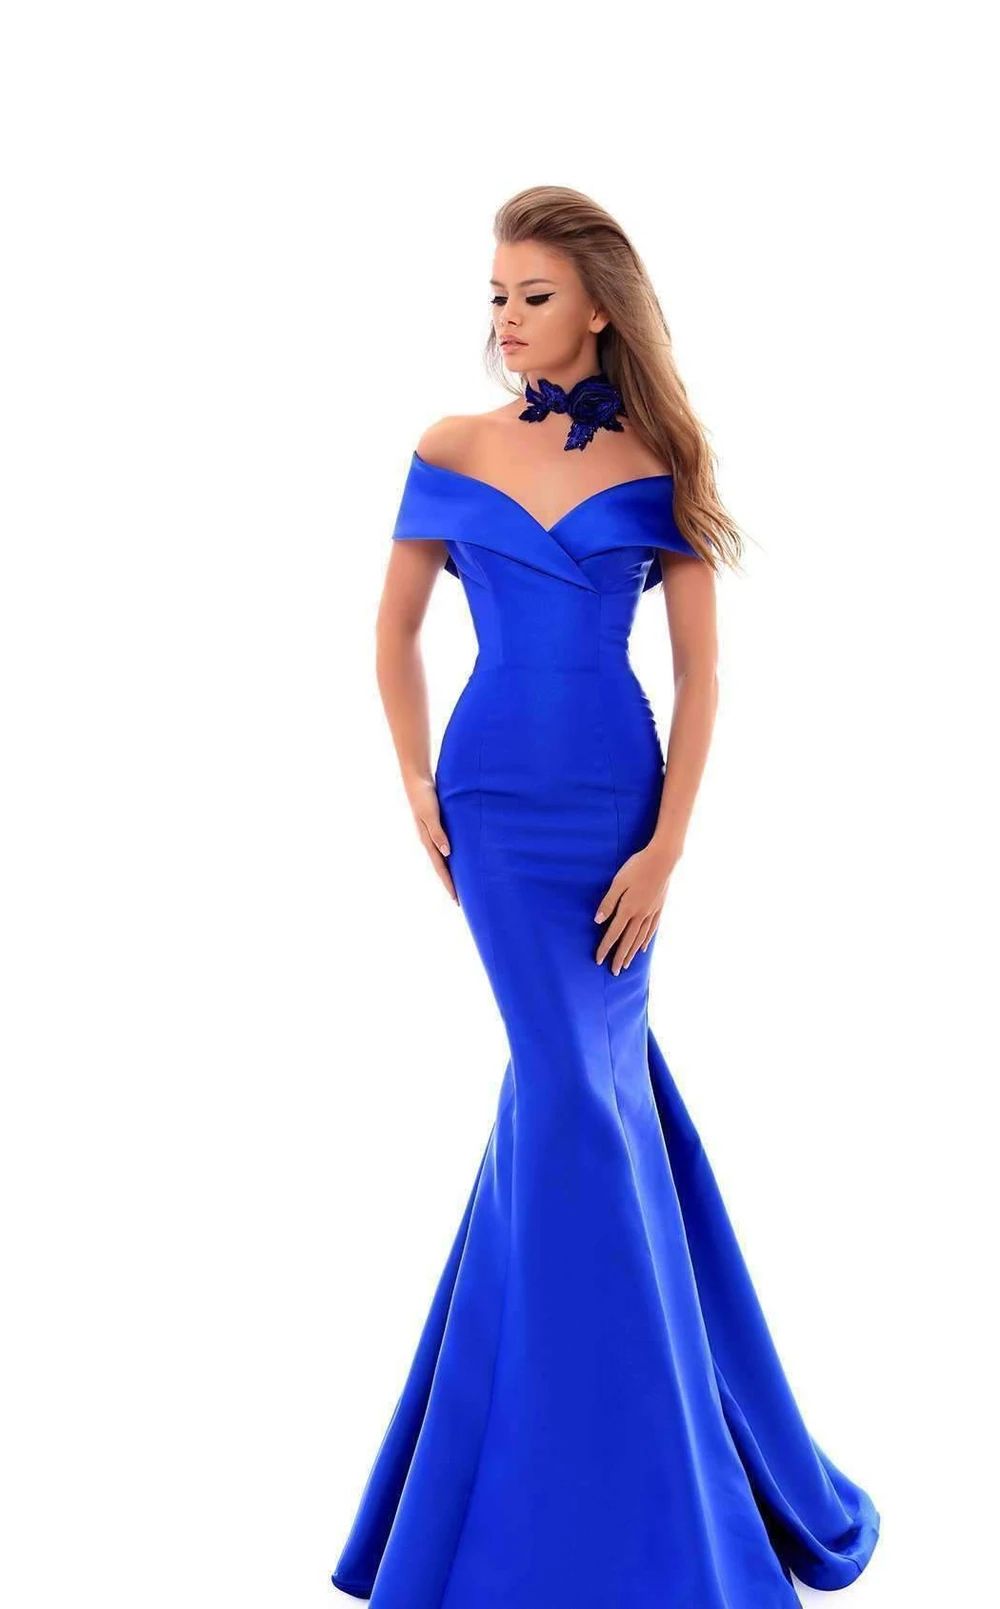 Tarik Ediz Formal Gown Blue Size 4 Floor Length Prom Mermaid Dress on Queenly